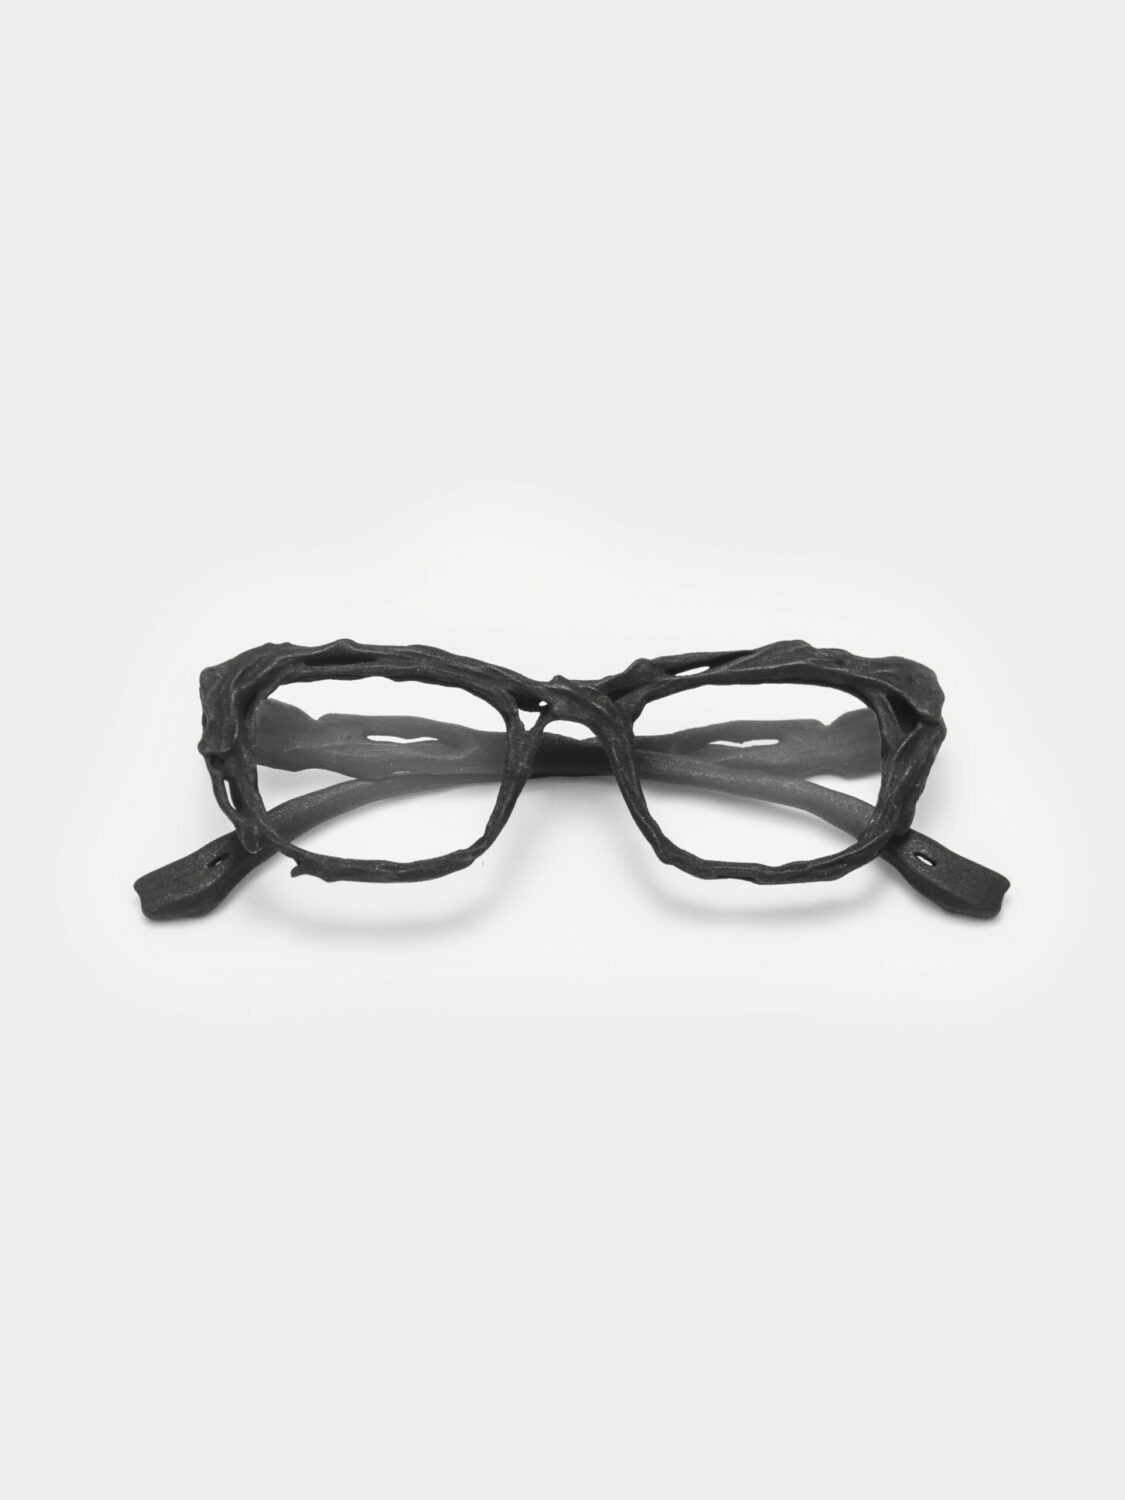 Embodied Angular Glasses